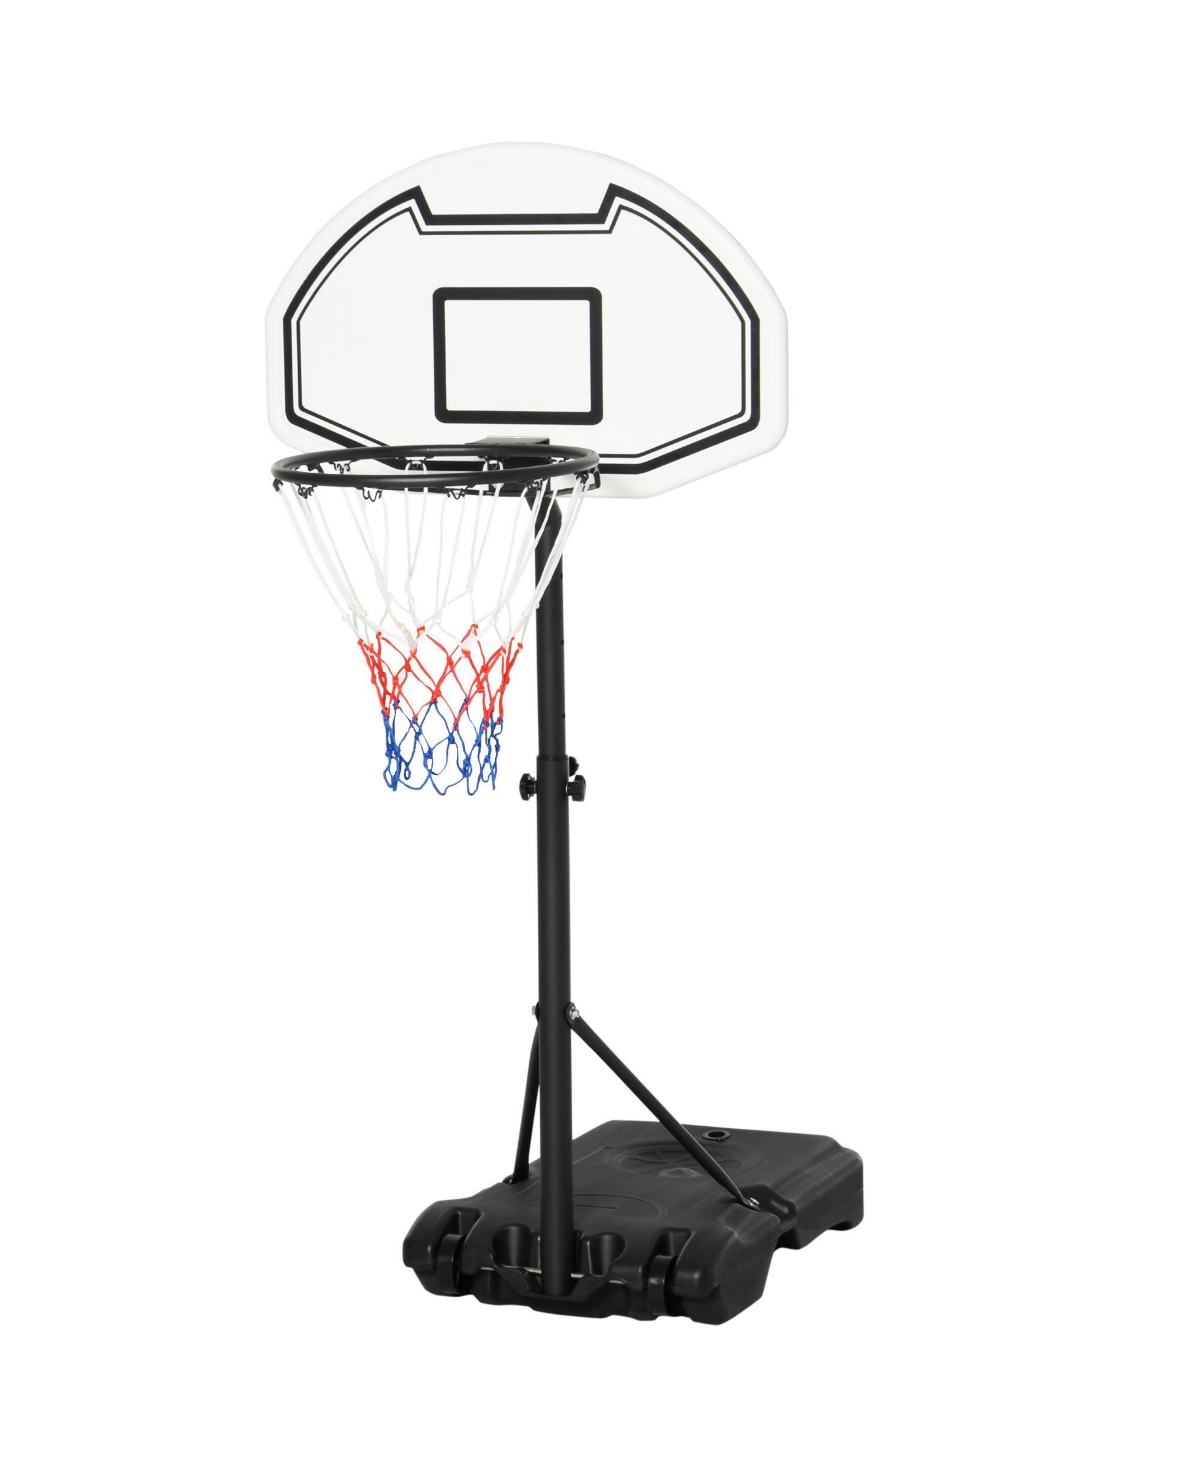 Aosom Poolside Basketball Hoop Stand Portable Basketball System Goal, Adjustable Height 3'-4', 30" Backboard - Black